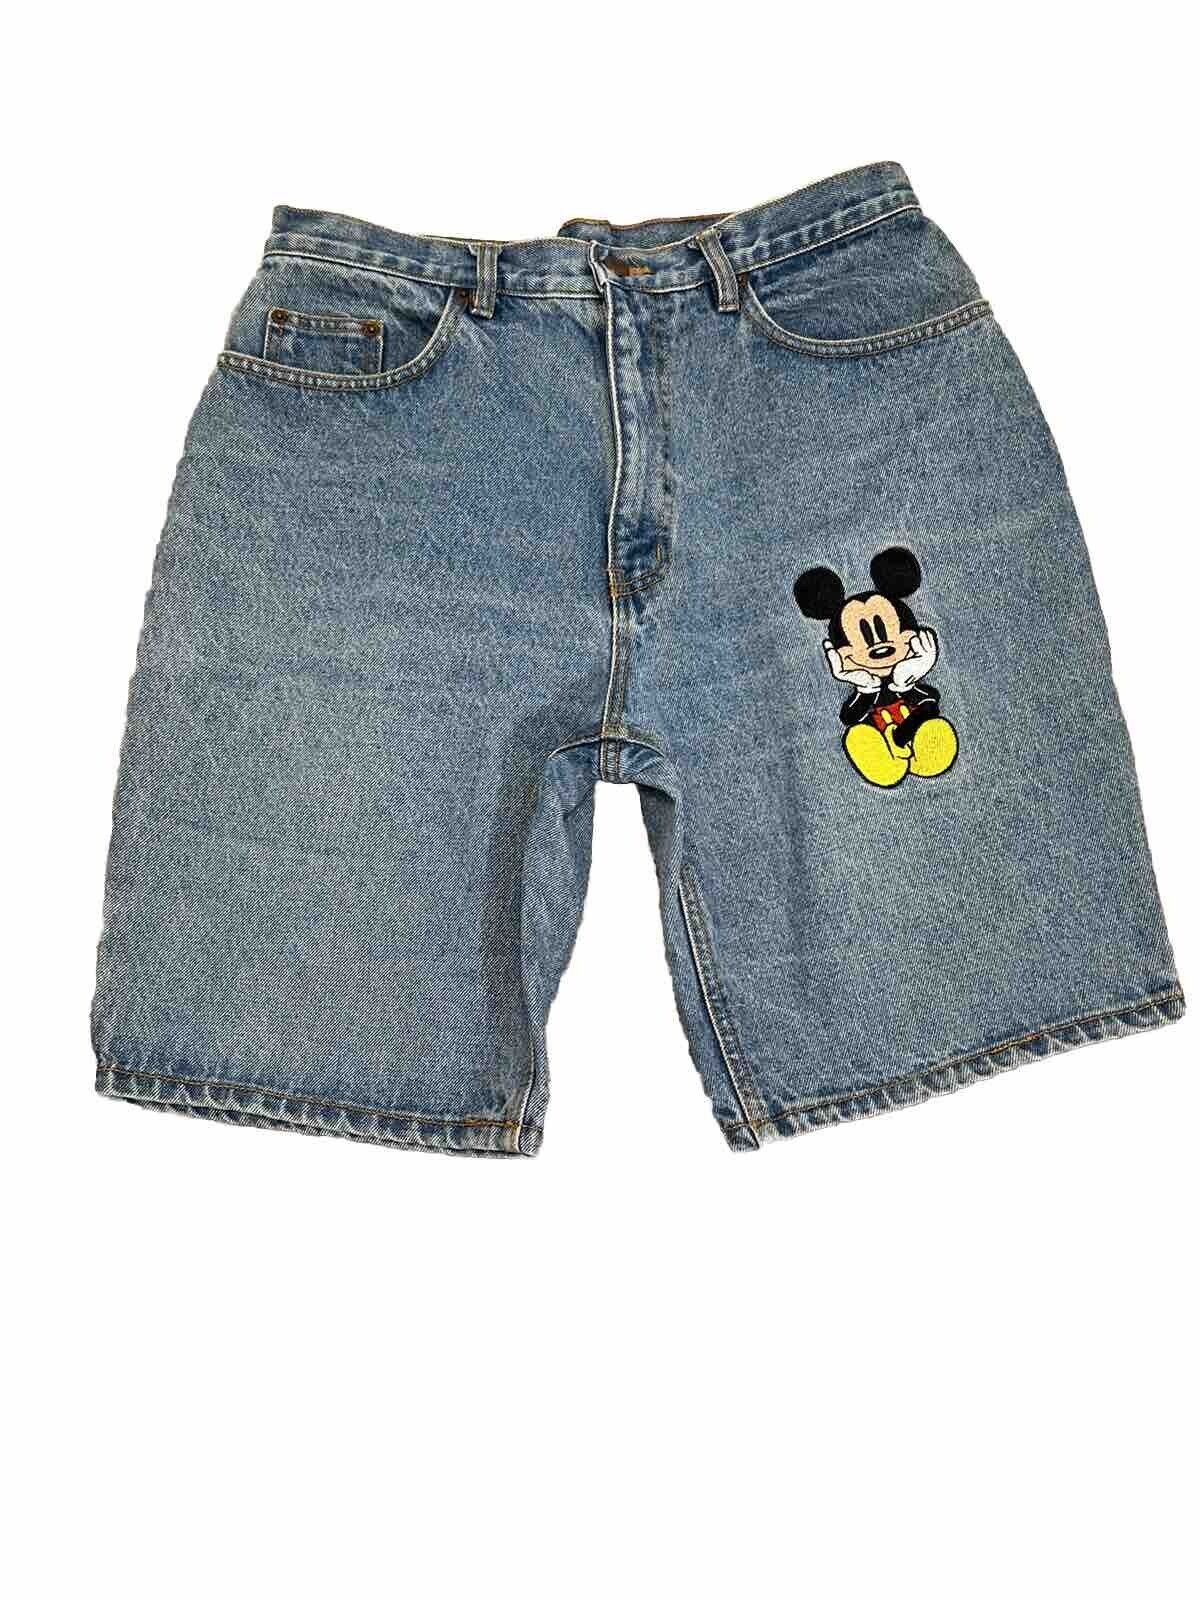 Vintage Mens L Mickey Inc Denim Jean Shorts Embroidered Pocket Disney 32 x 10